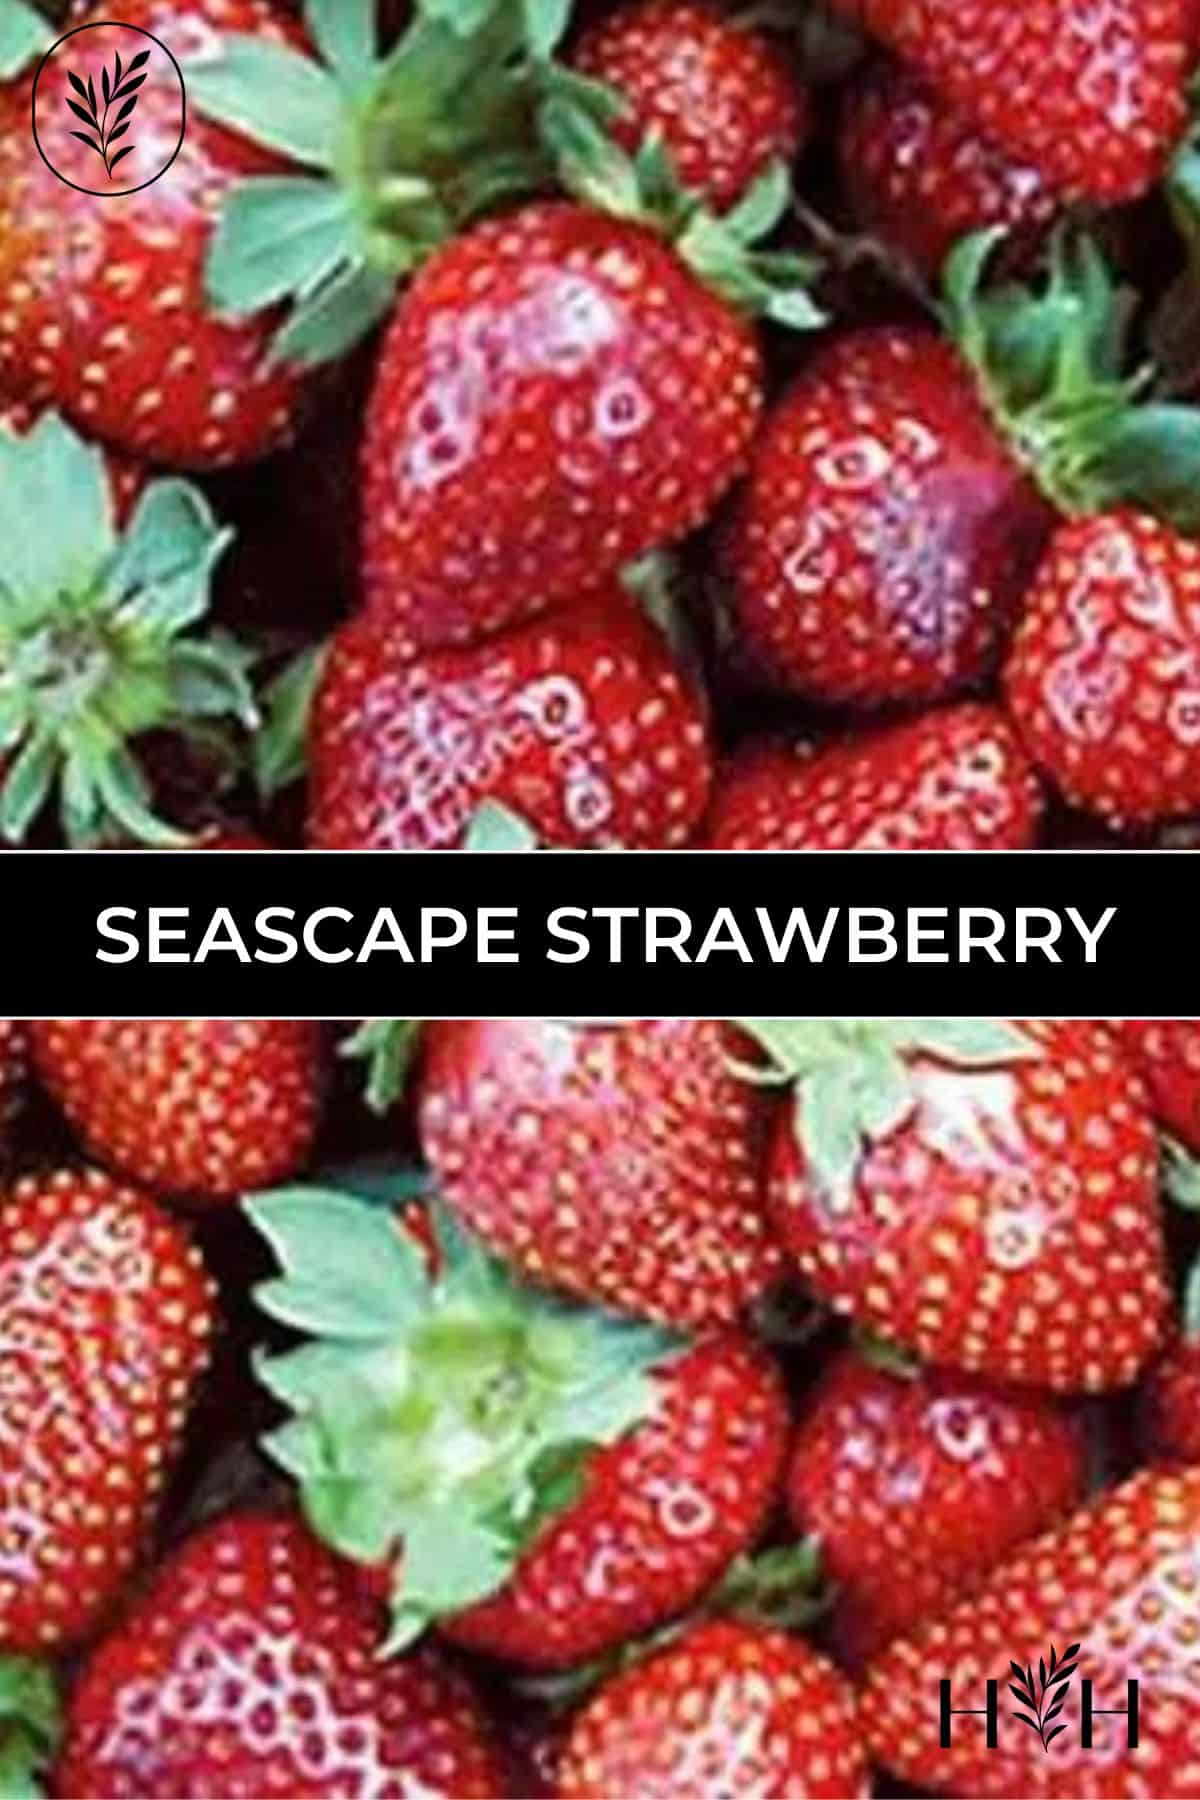 Seascape strawberry via @home4theharvest